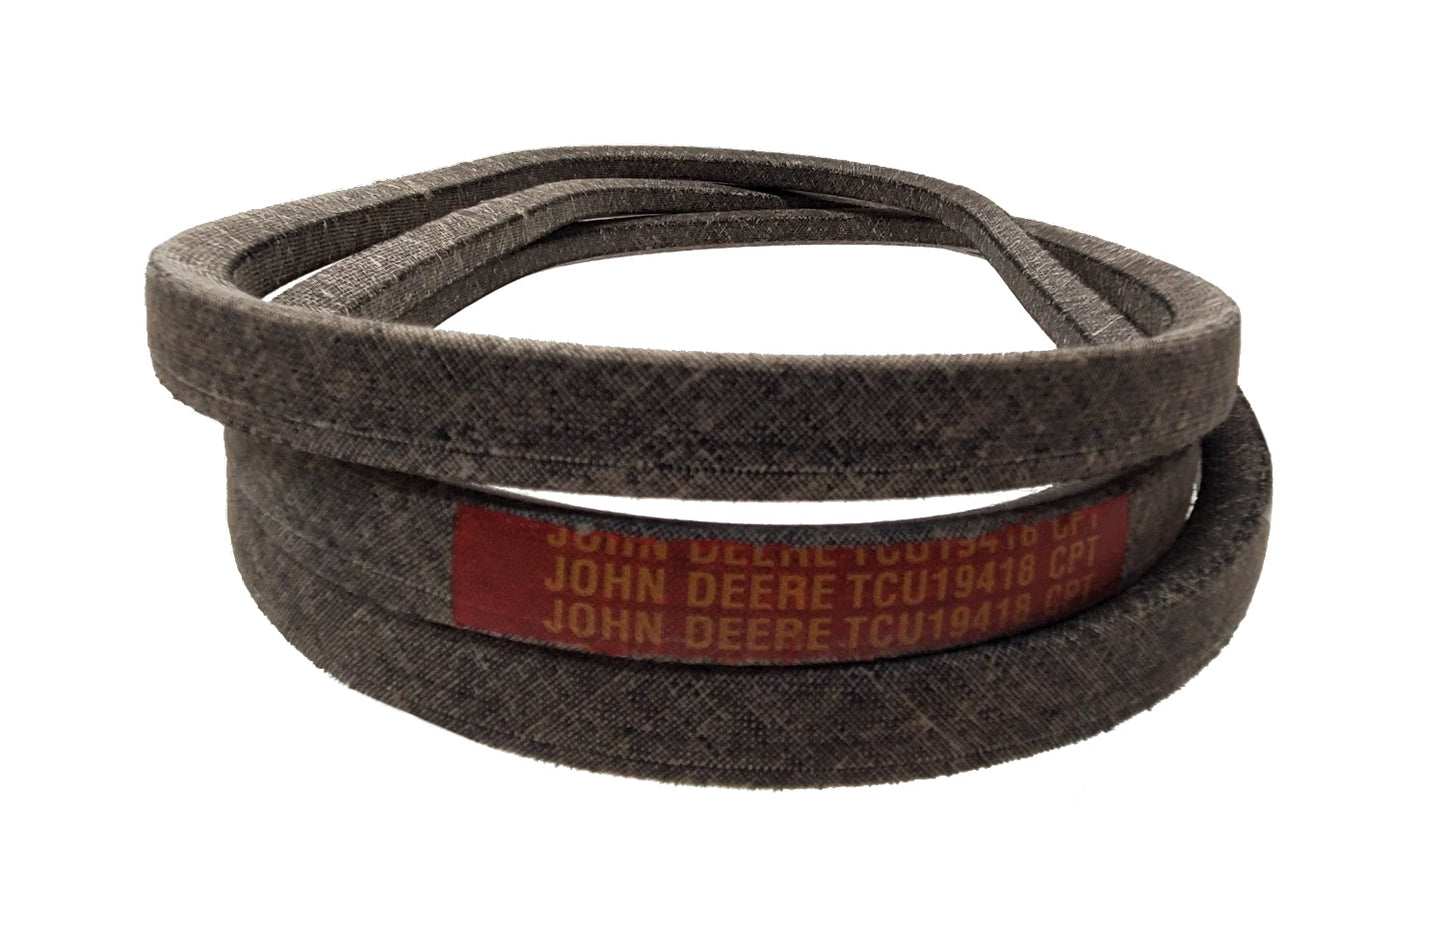 John Deere Original Equipment Belt #TCU19418